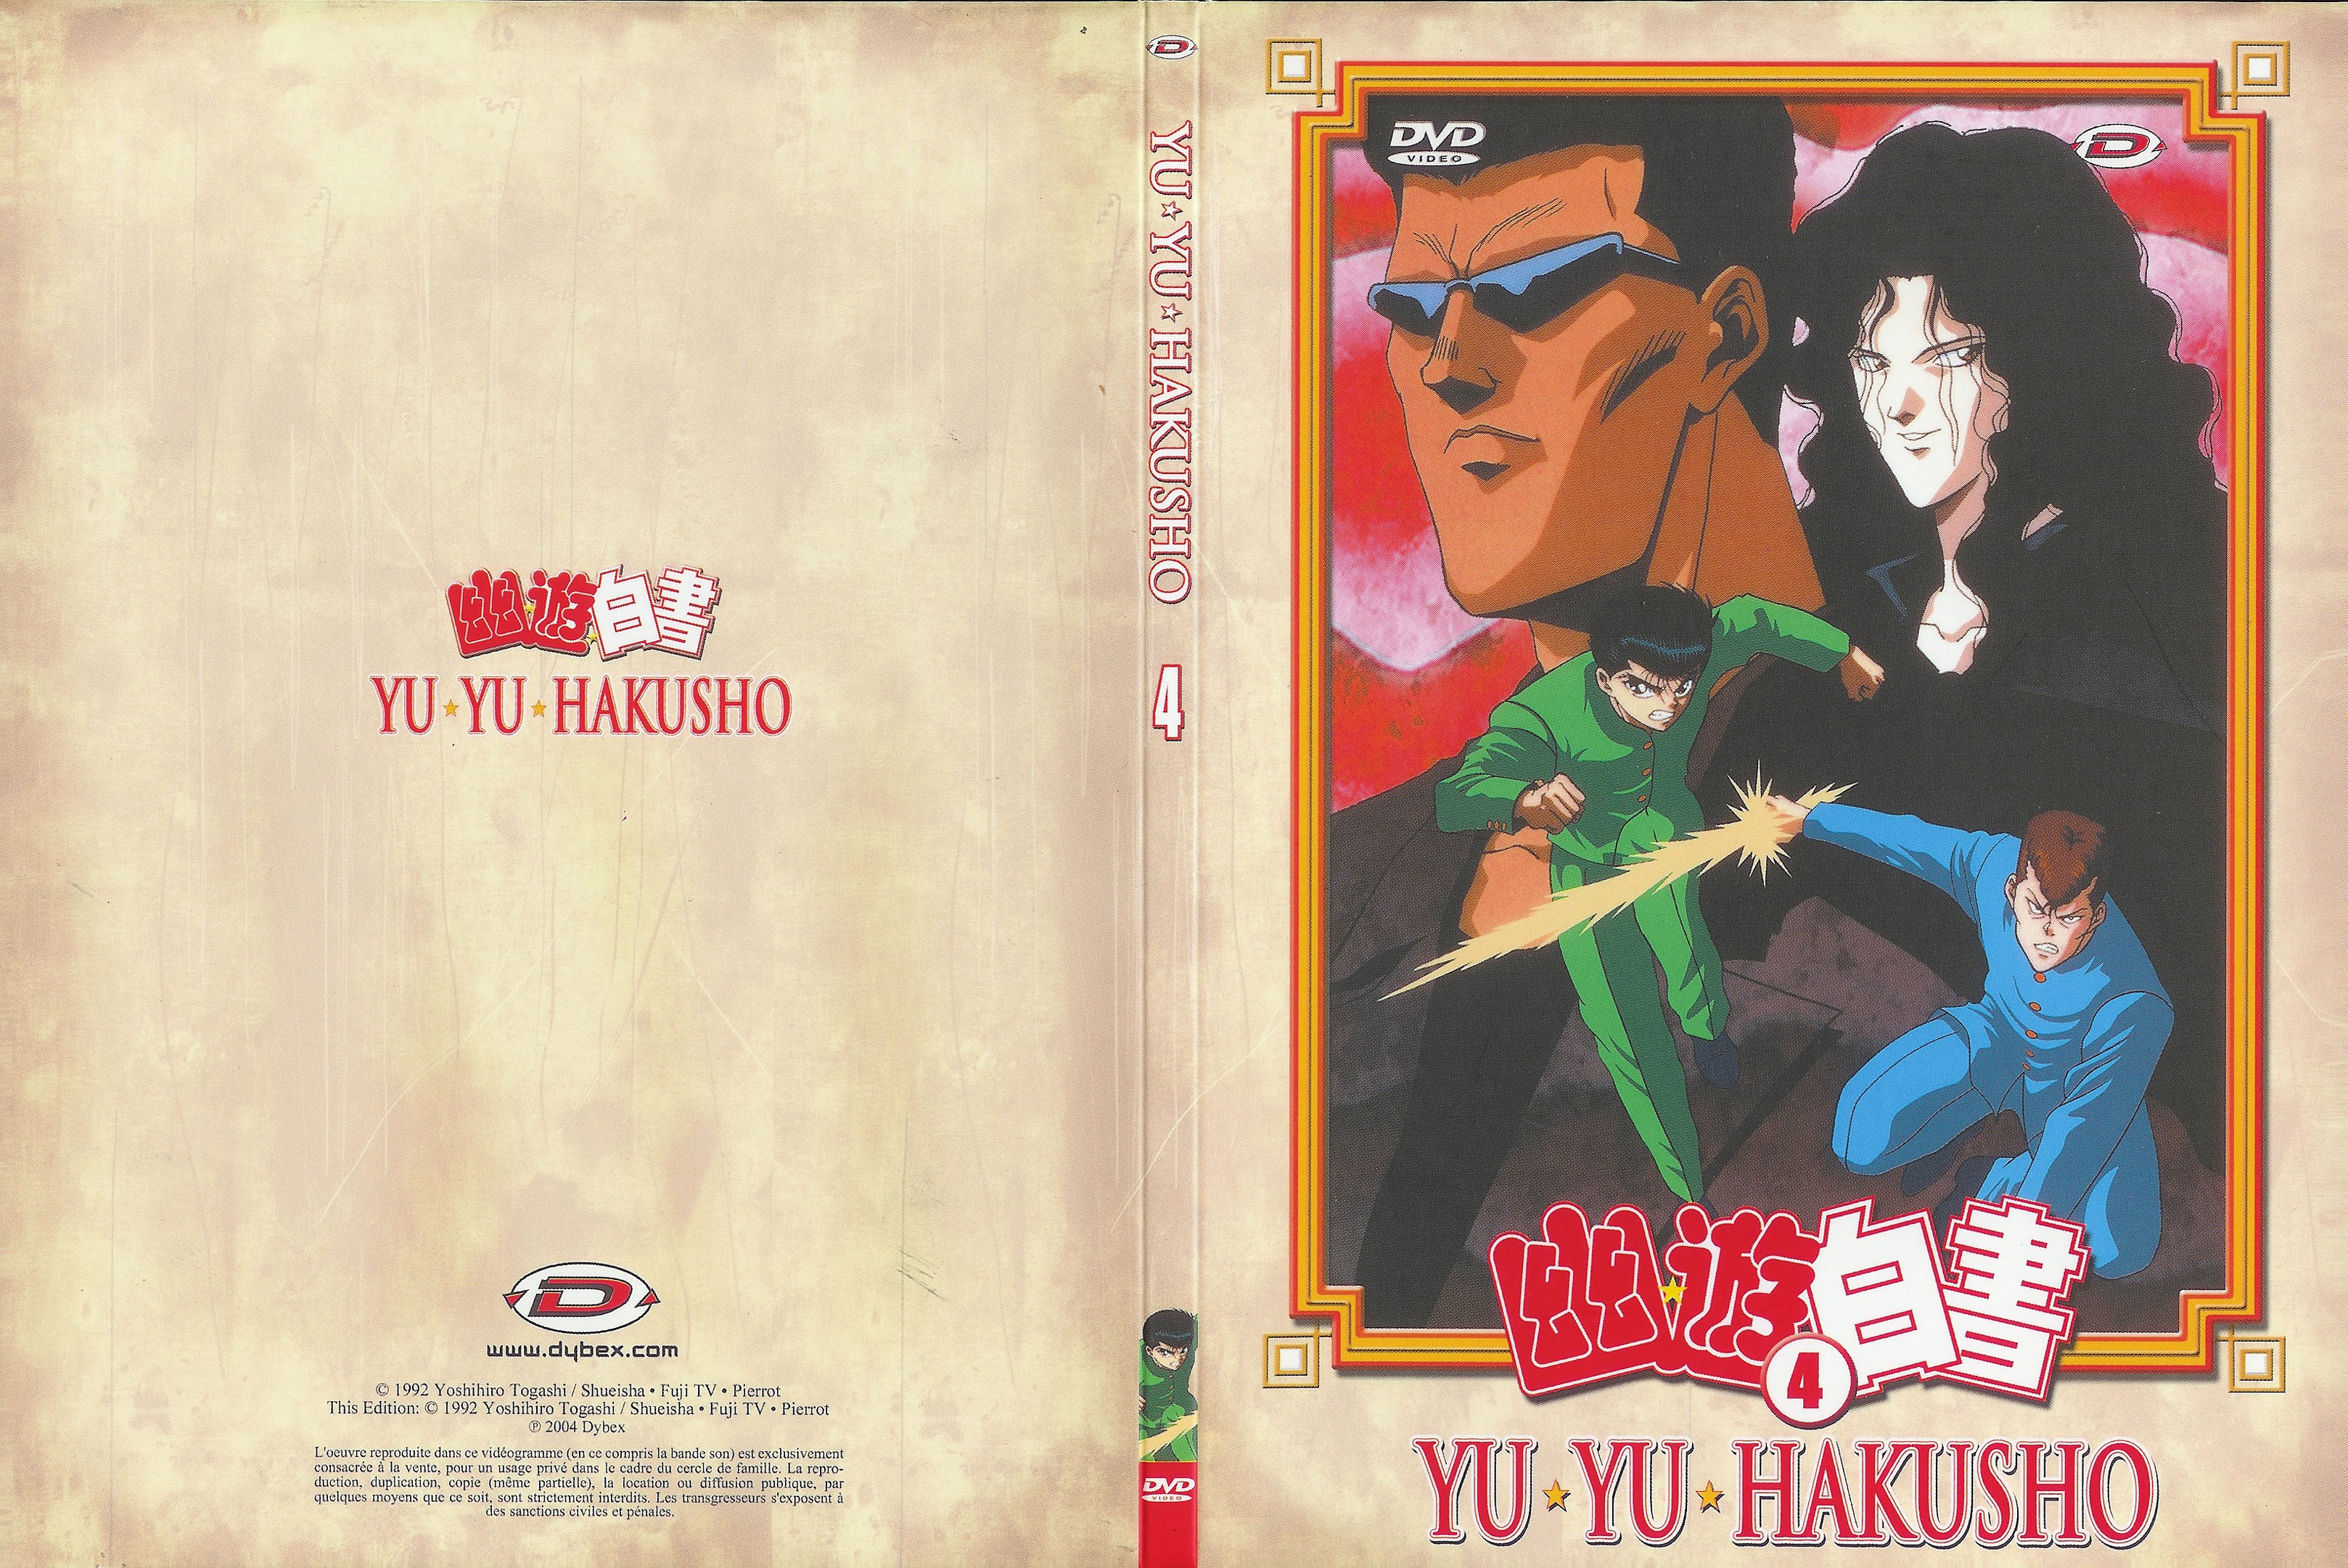 Jaquette DVD Yu yu hakusho vol 04